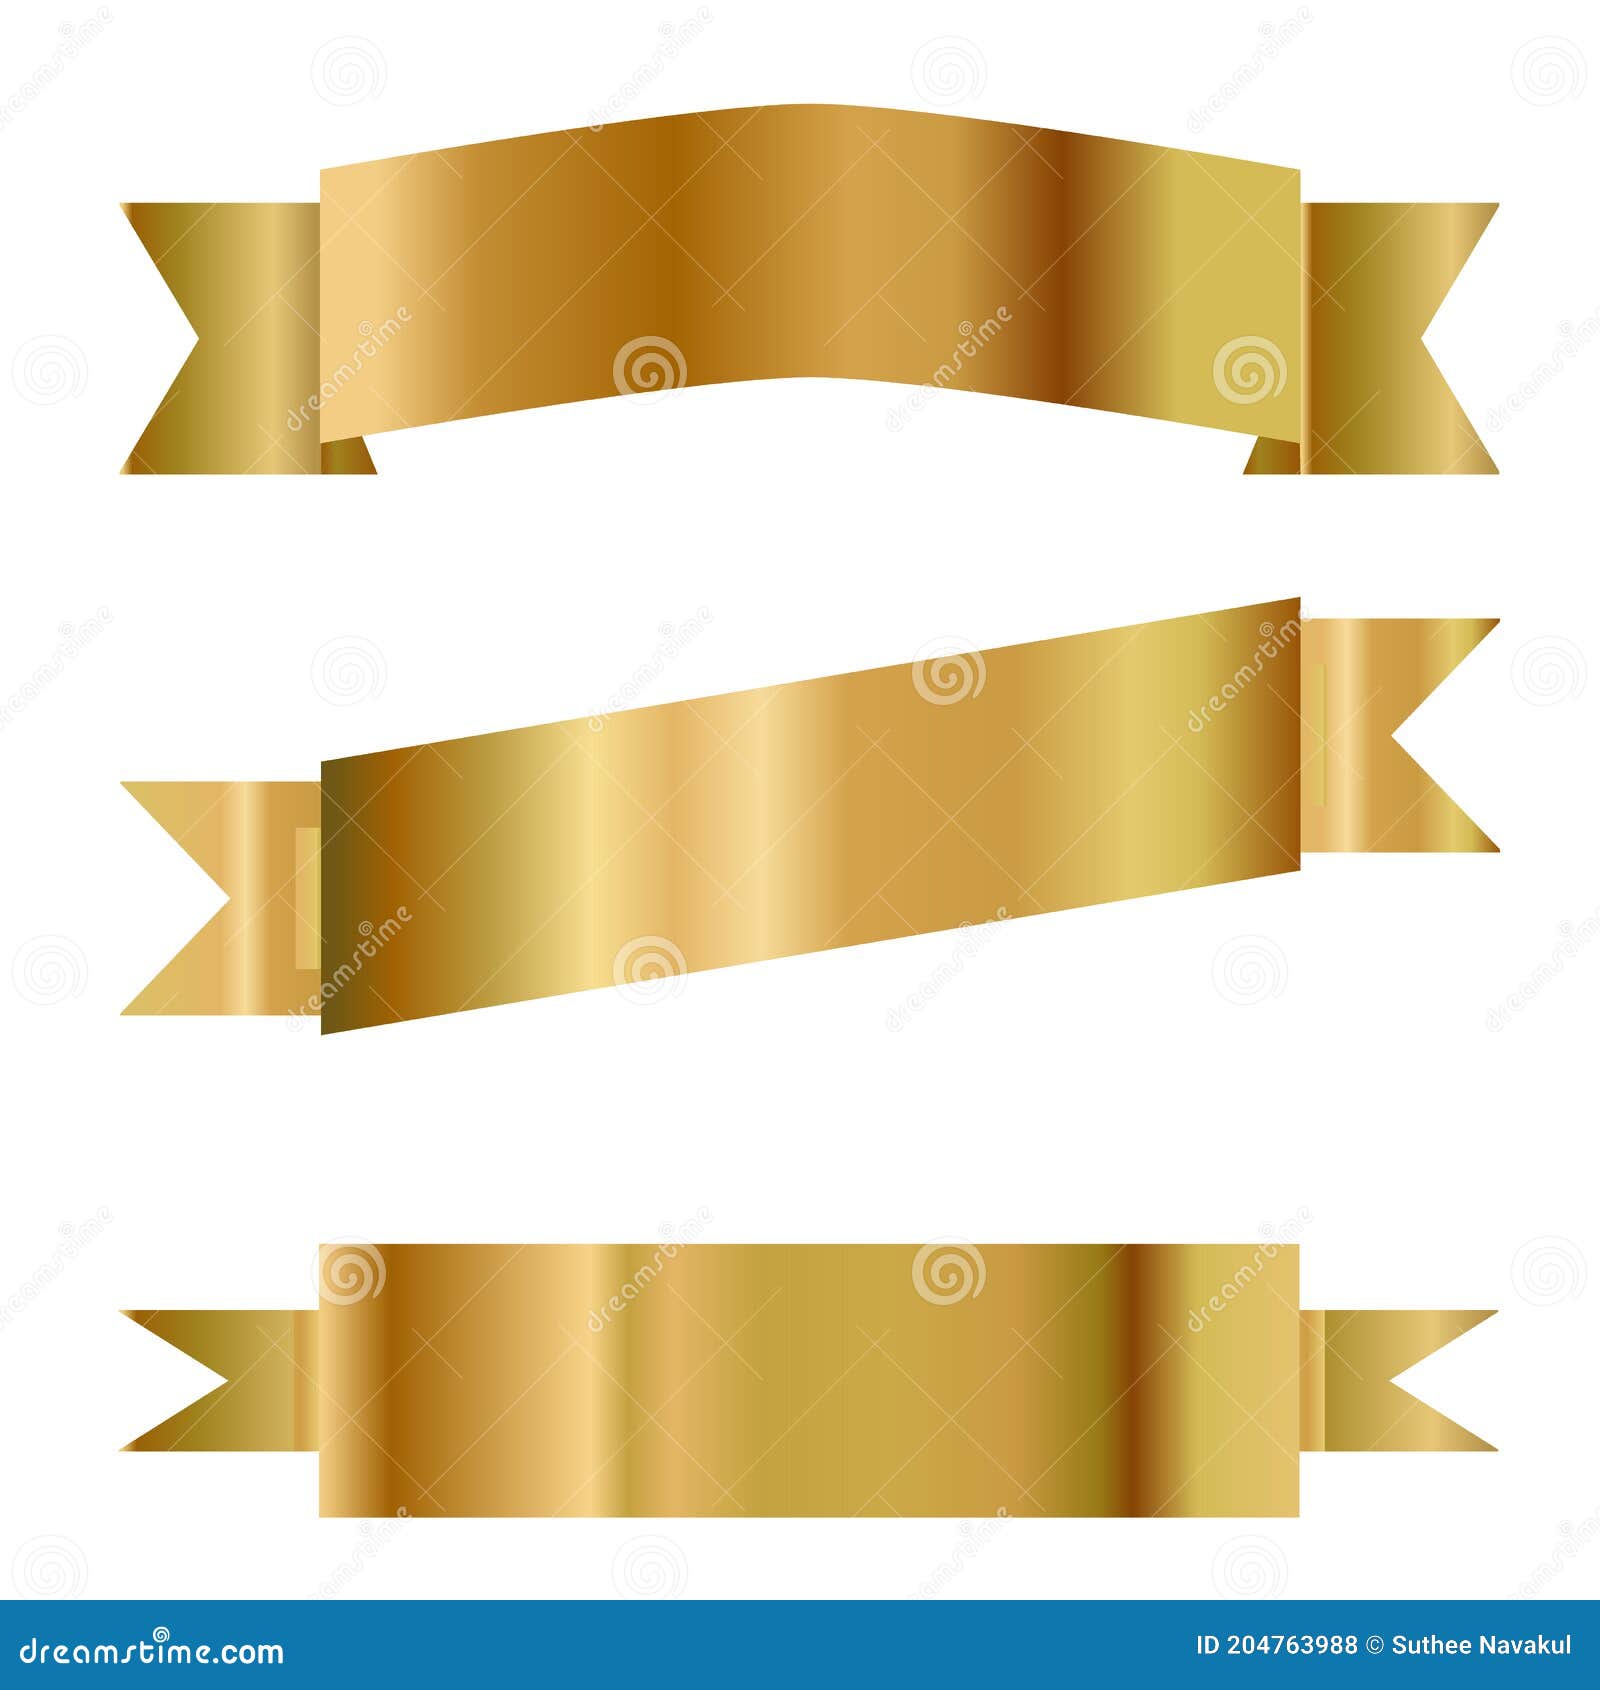 https://thumbs.dreamstime.com/z/vector-de-cinta-dorada-conjunto-cintas-doradas-sobre-fondo-blanco-estilo-plano-204763988.jpg